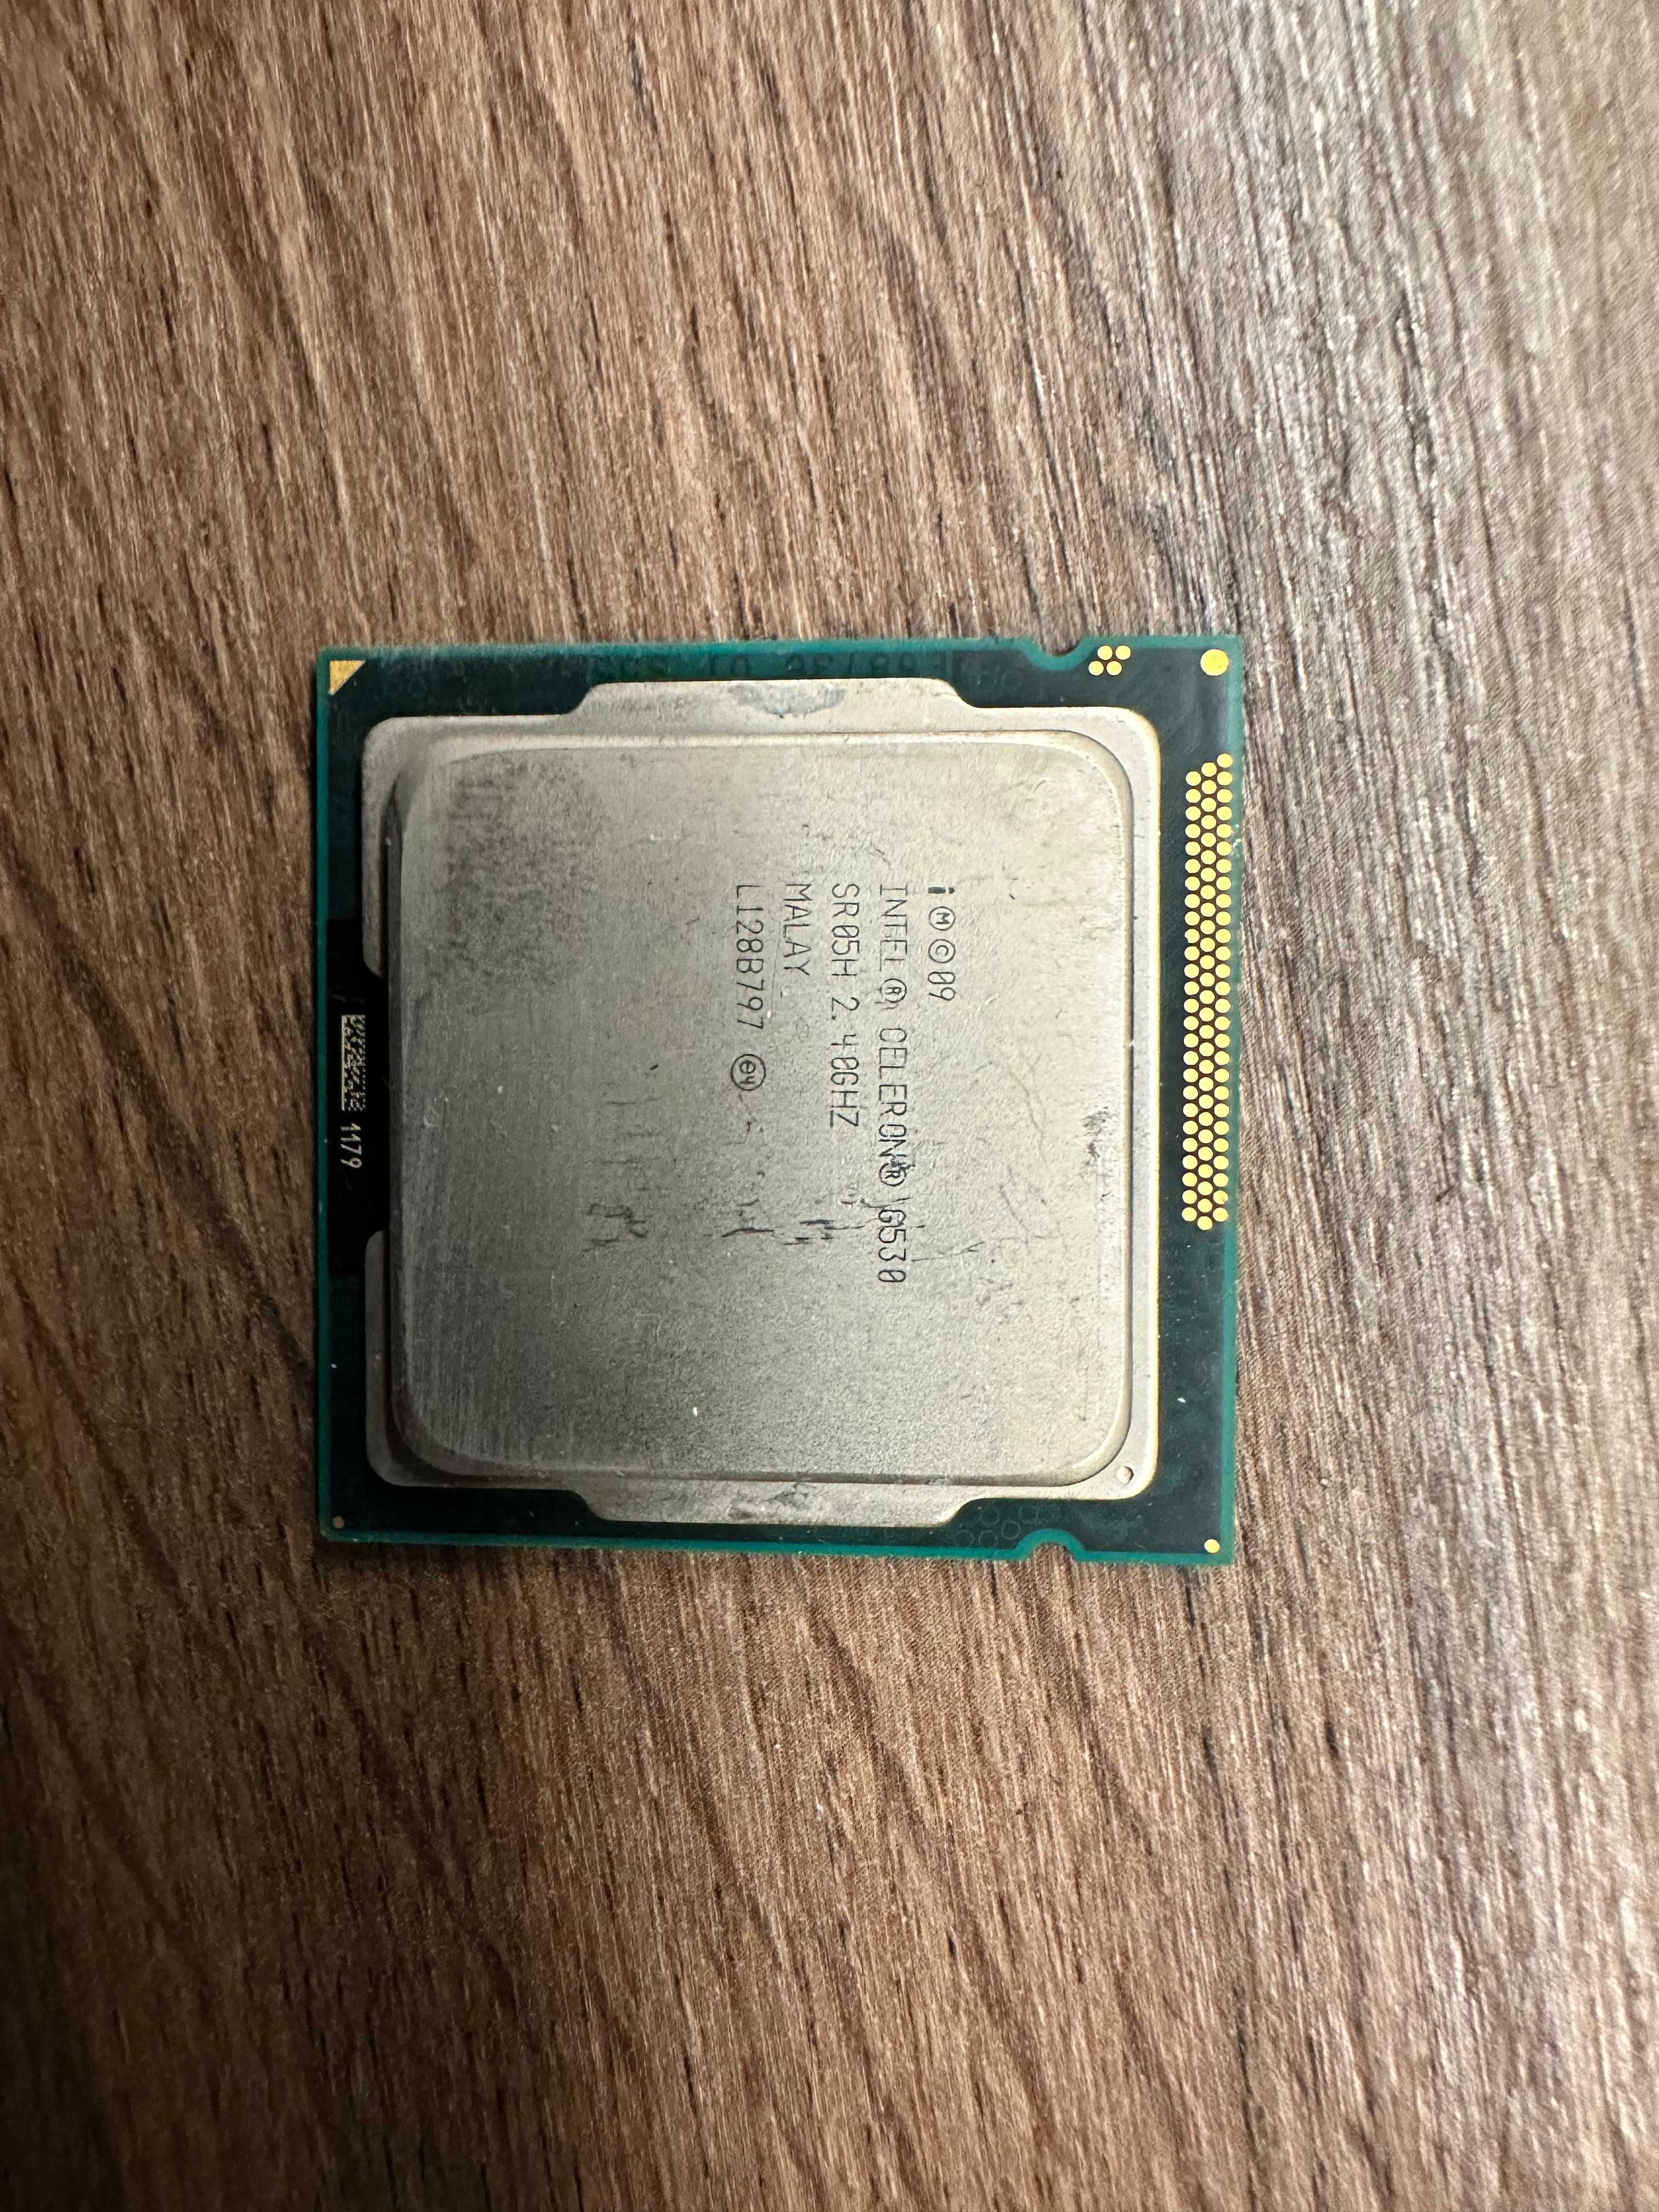 Intel Celeron Processor G530 2M Cache 2.40